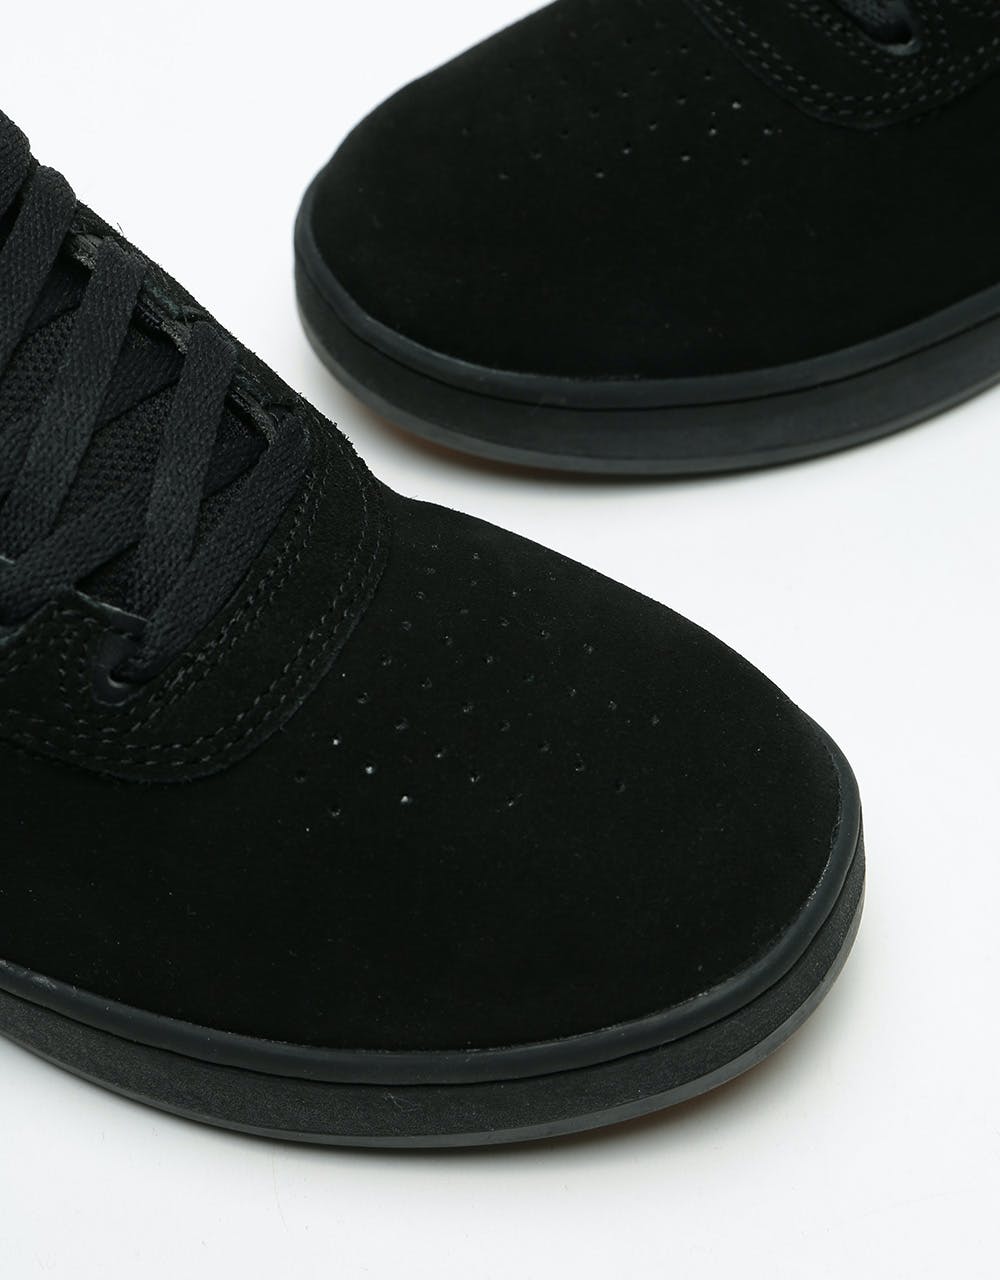 Etnies x Michelin Joslin Skate Shoes - Black